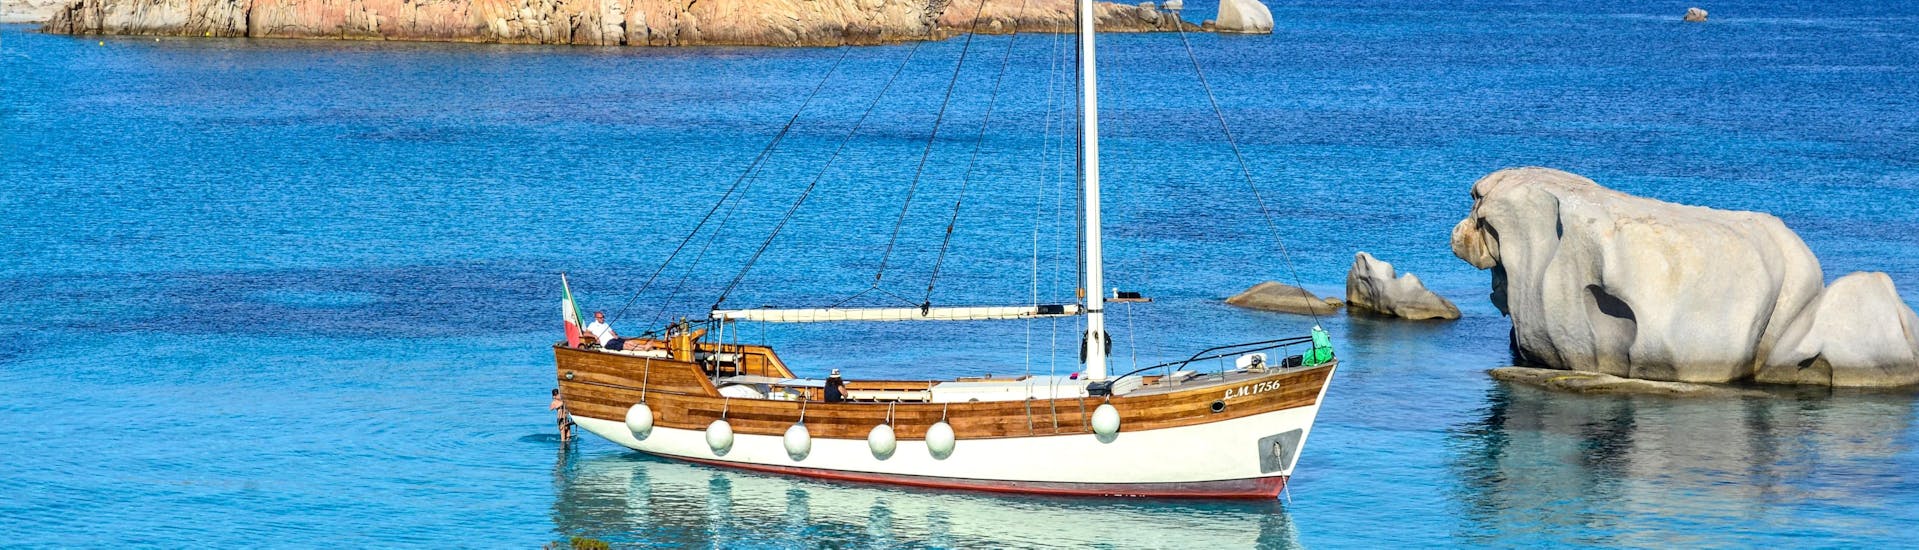 The sailing boat from Maggior Leggero Tour is anchored in the bay during the Semi-Private Sailing Boat Trip to La Maddalena Archipelago.